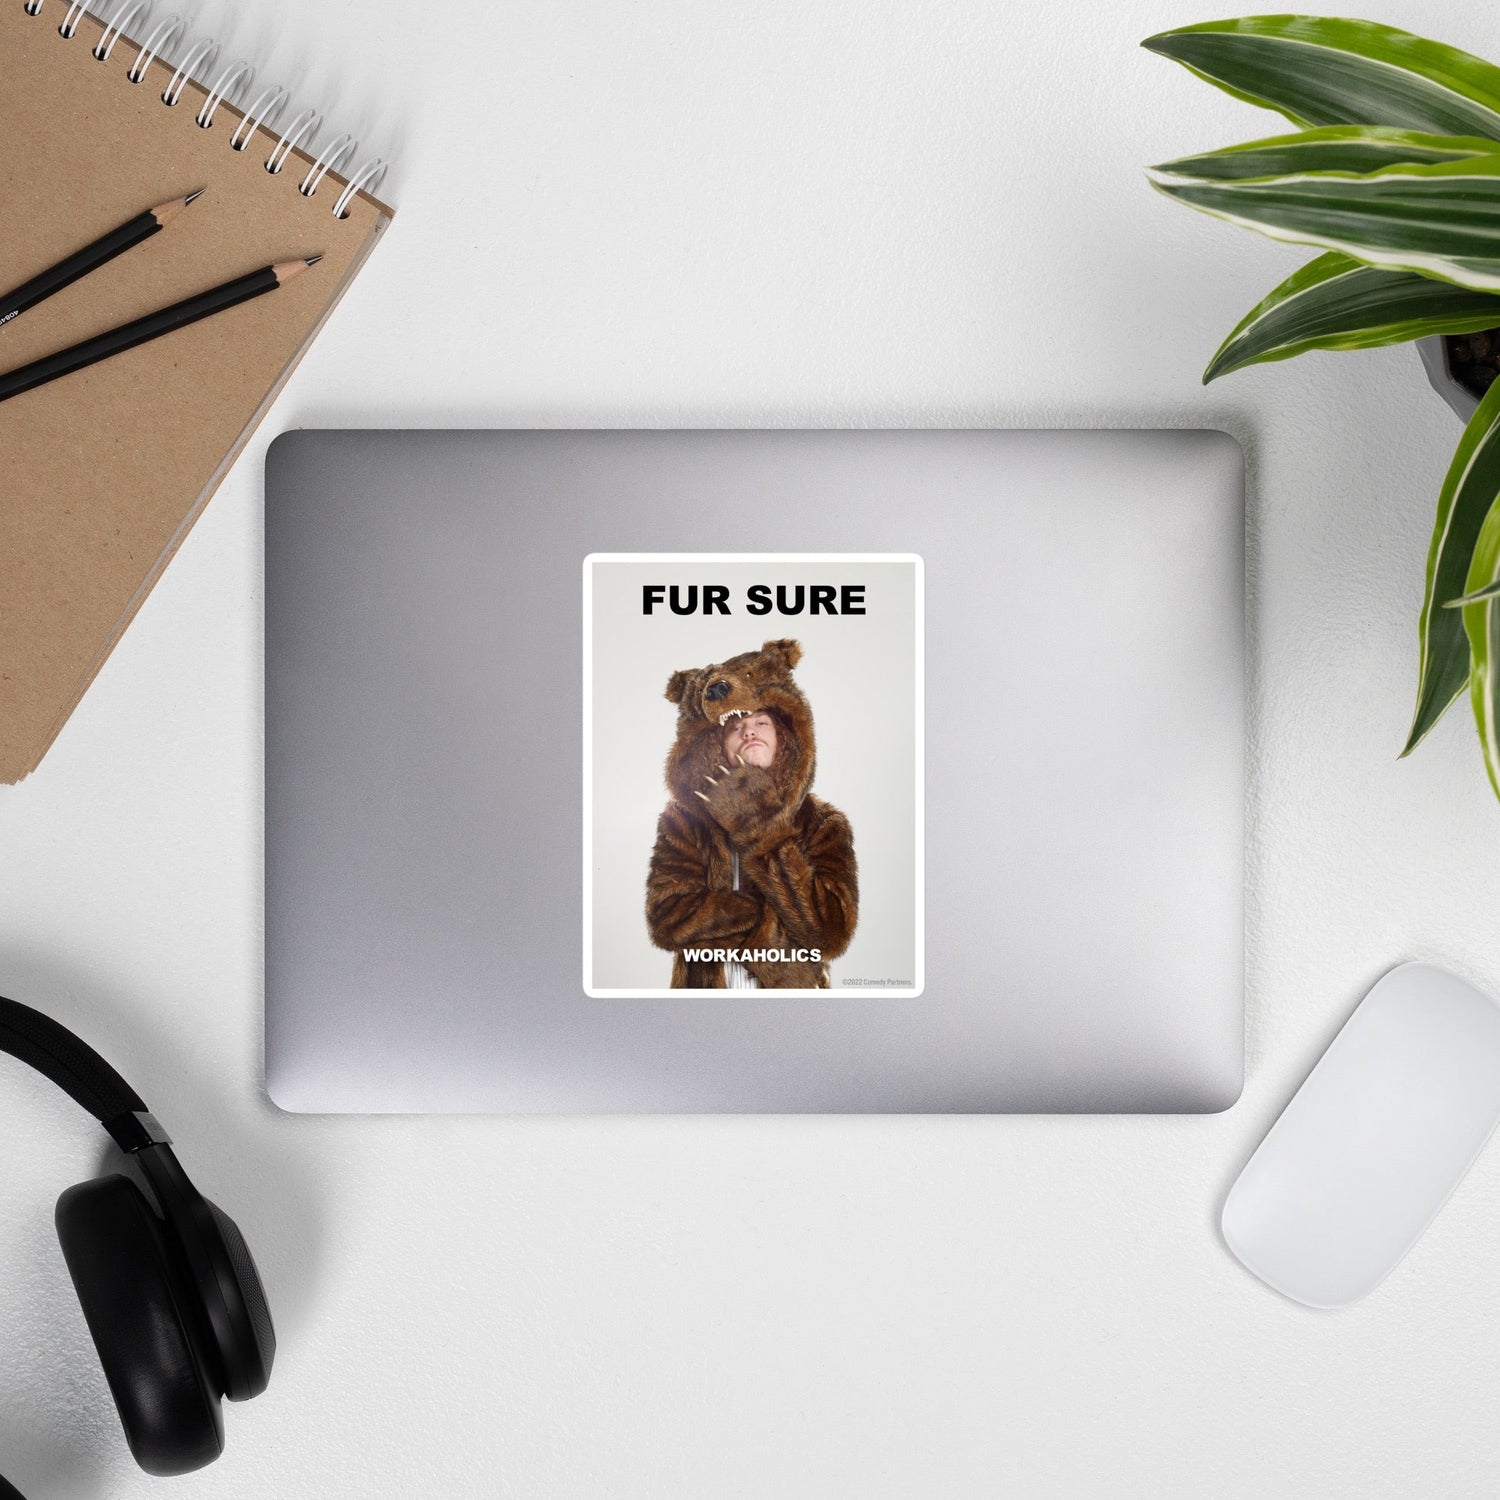 Workaholics "Fur Sure" Die Cut Sticker - Paramount Shop